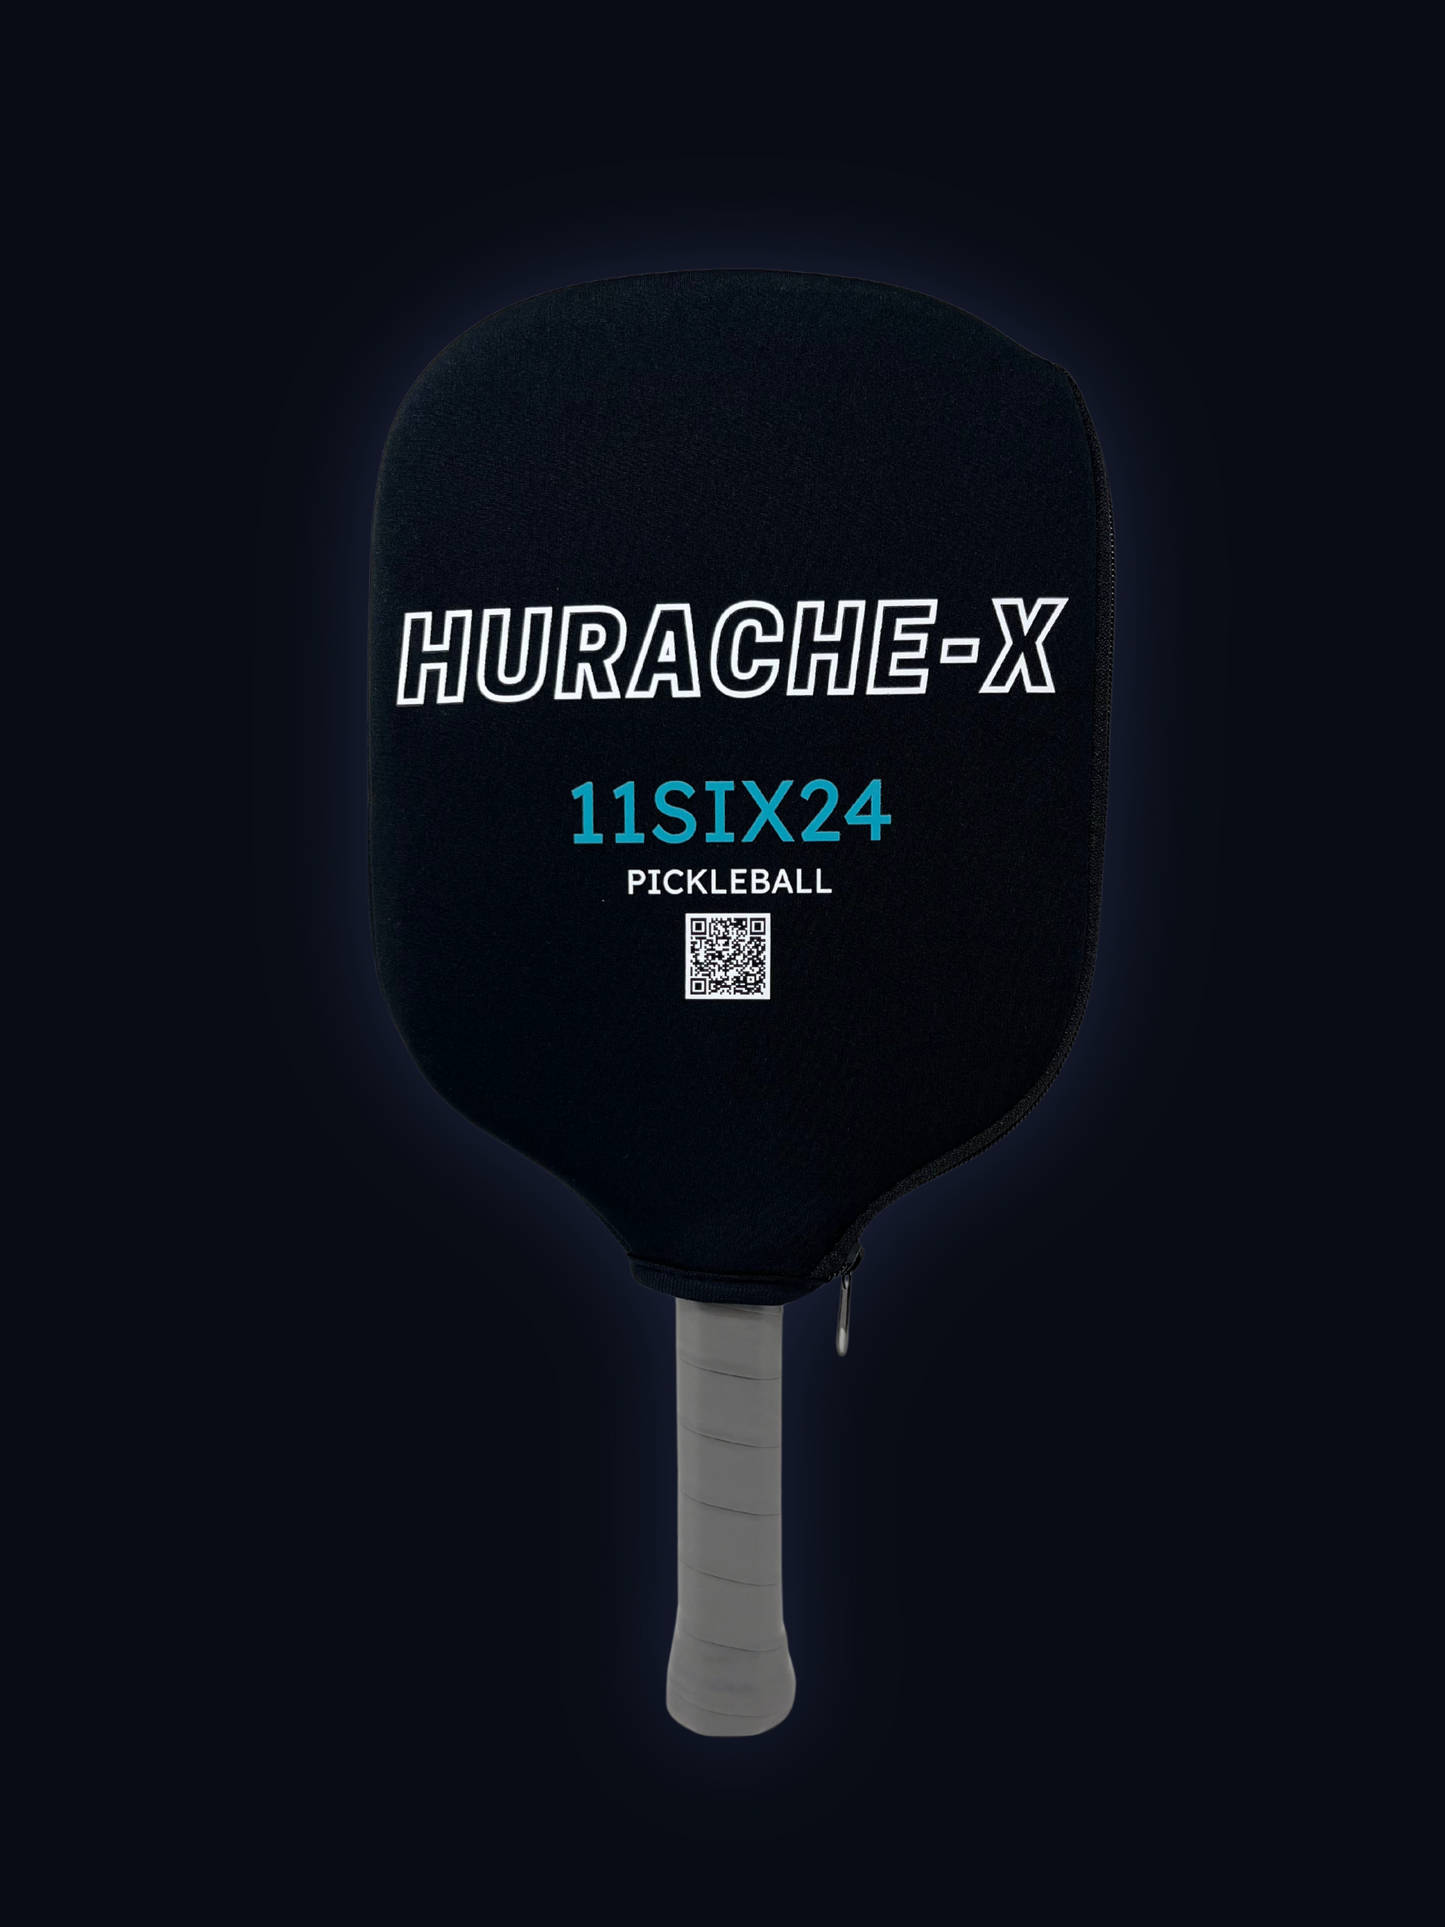 Hurache-X Control